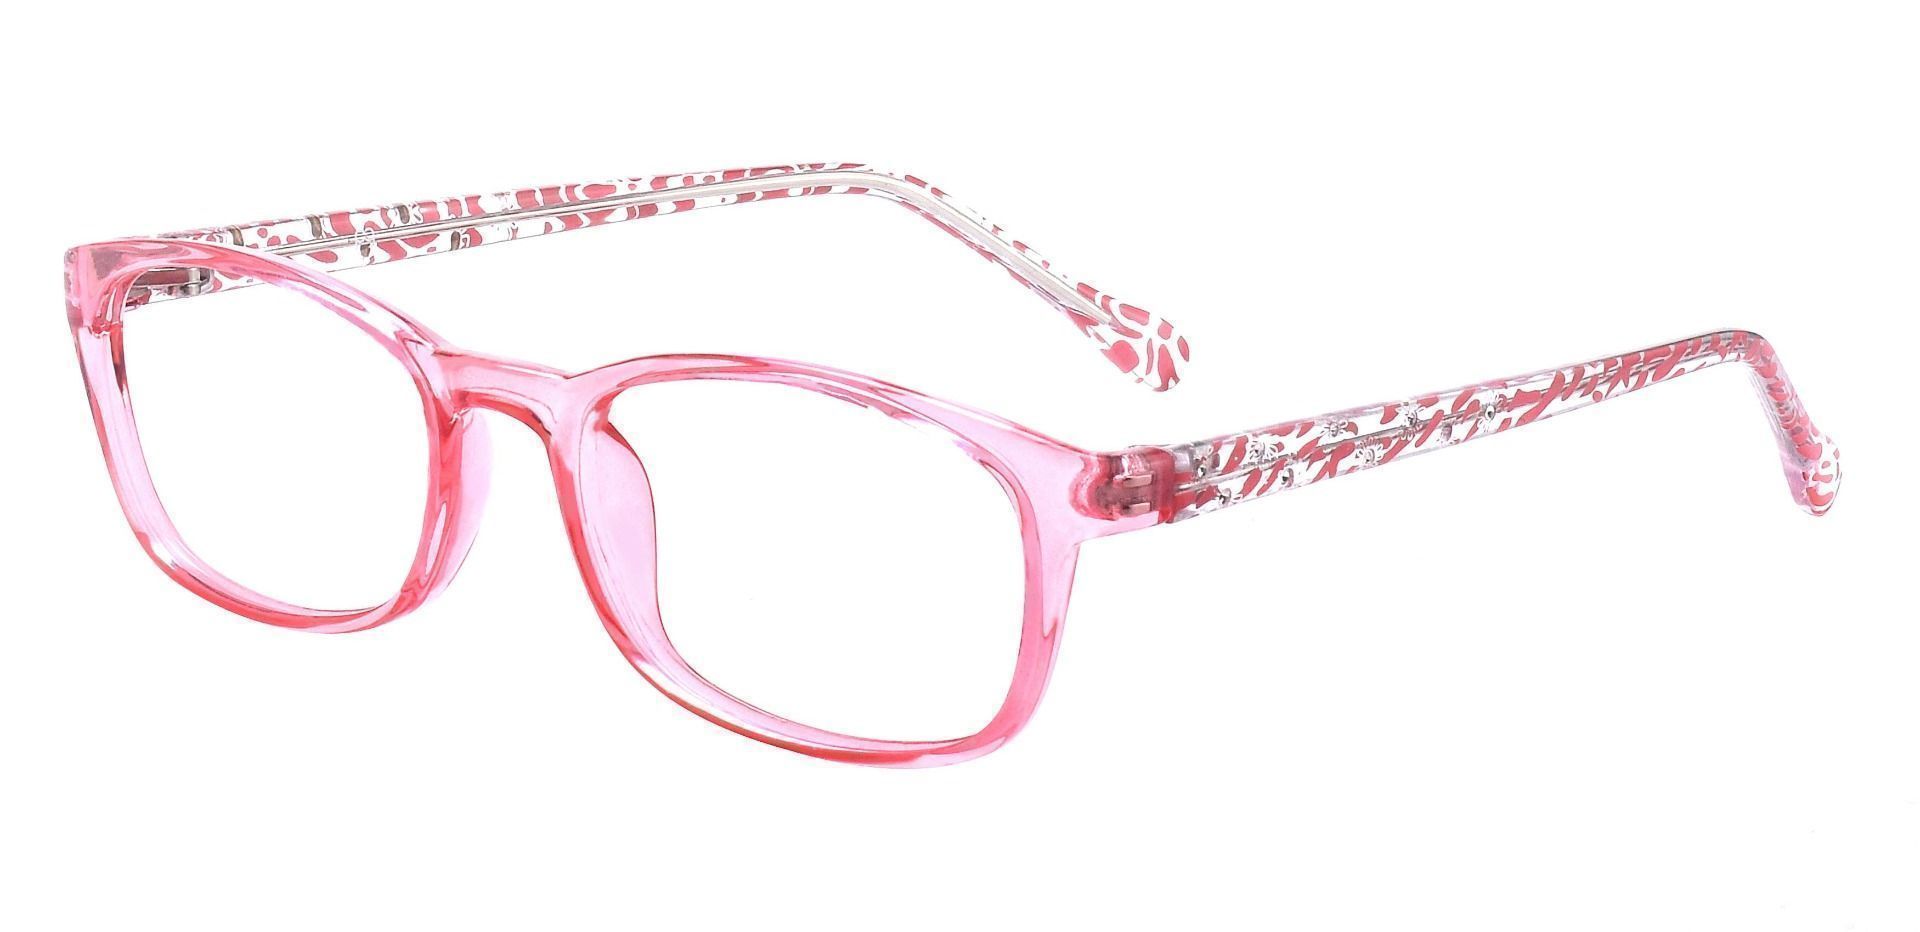 Violet Rectangle Prescription Glasses - Pink